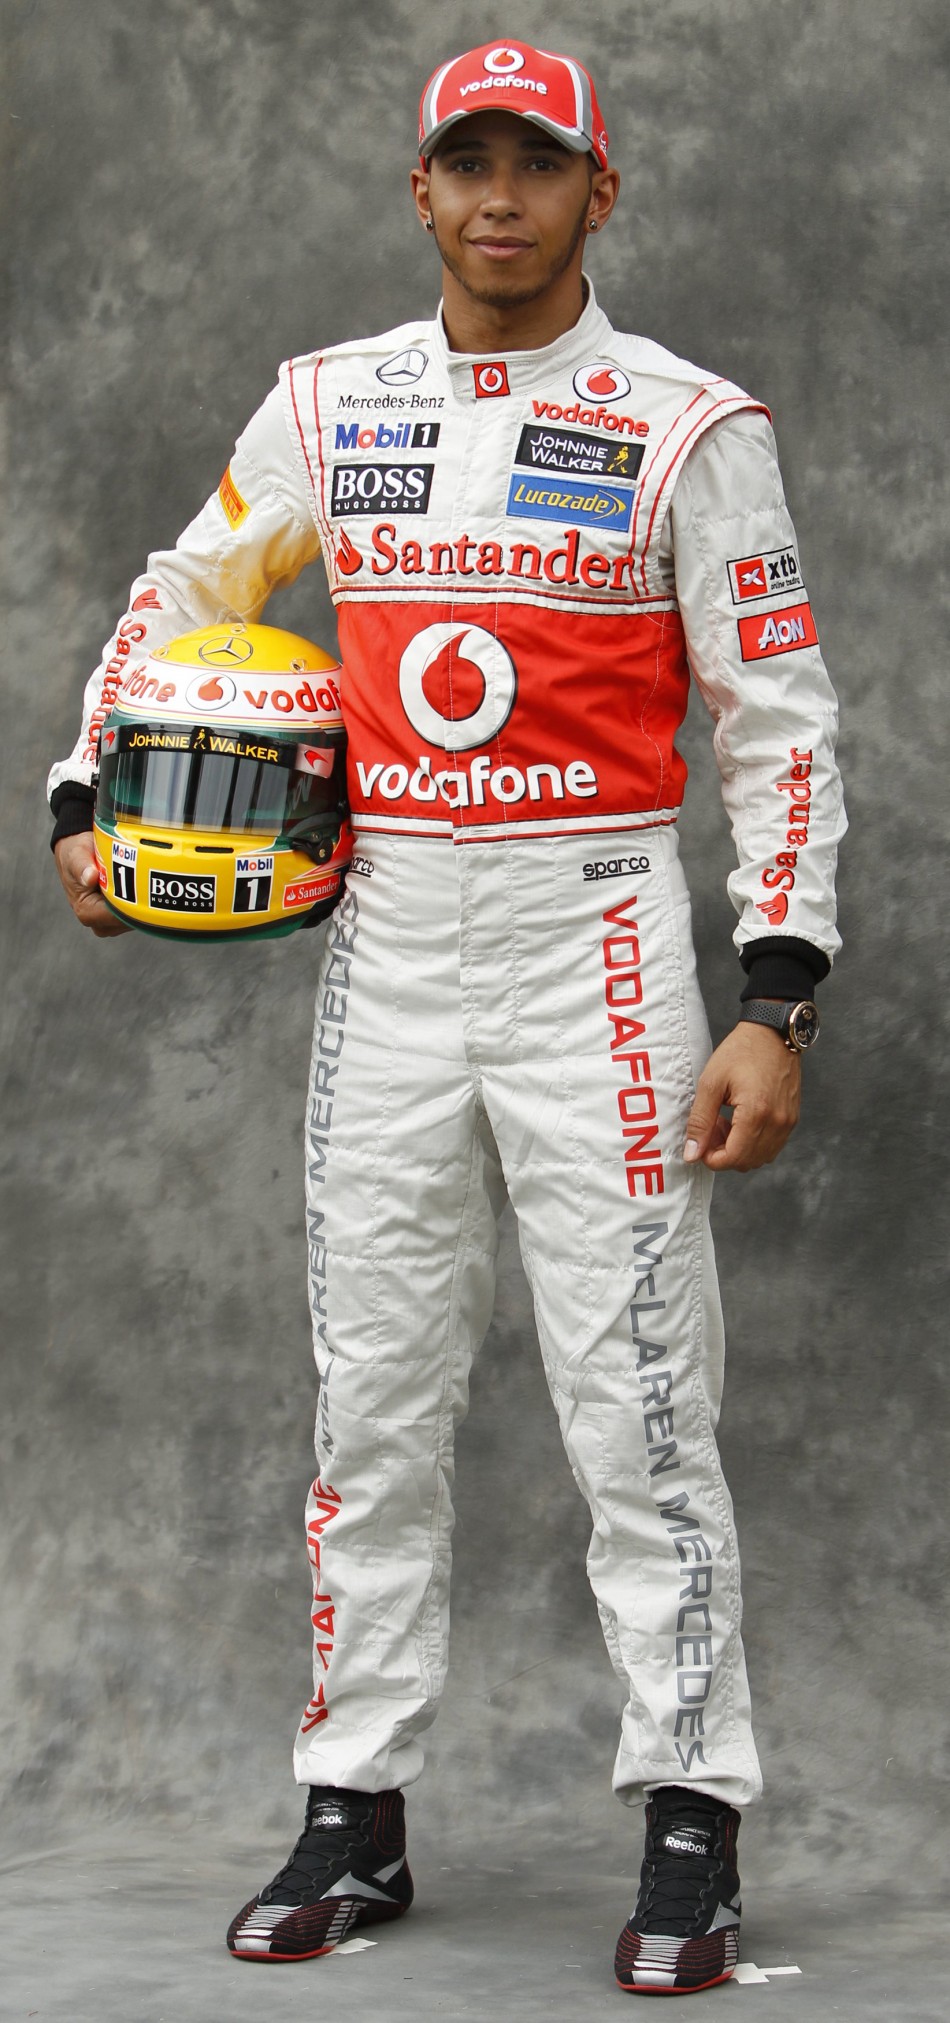 McLaren Formula One driver Hamilton poses prior to the Australian F1 Grand Prix at the Albert Park circuit in Melbourne